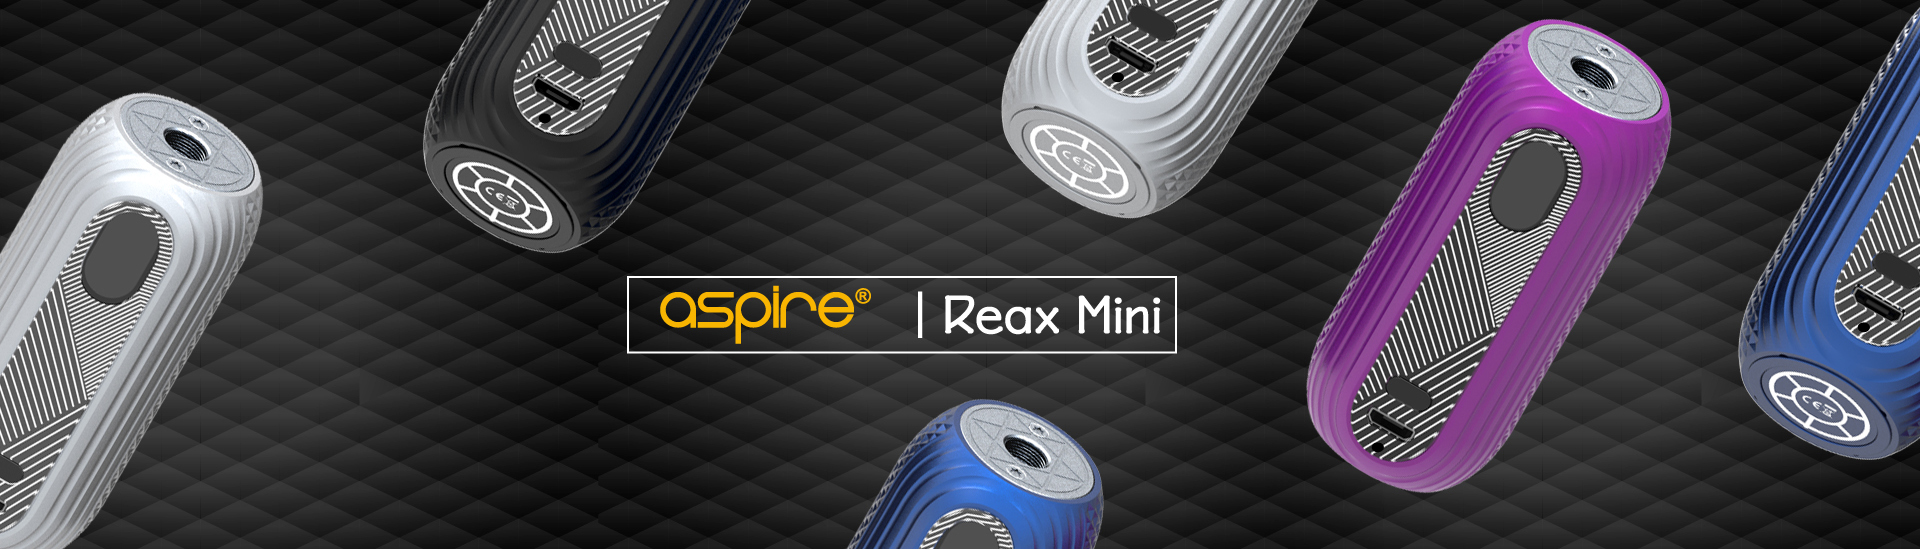 Aspire Reax Mini Mod 0